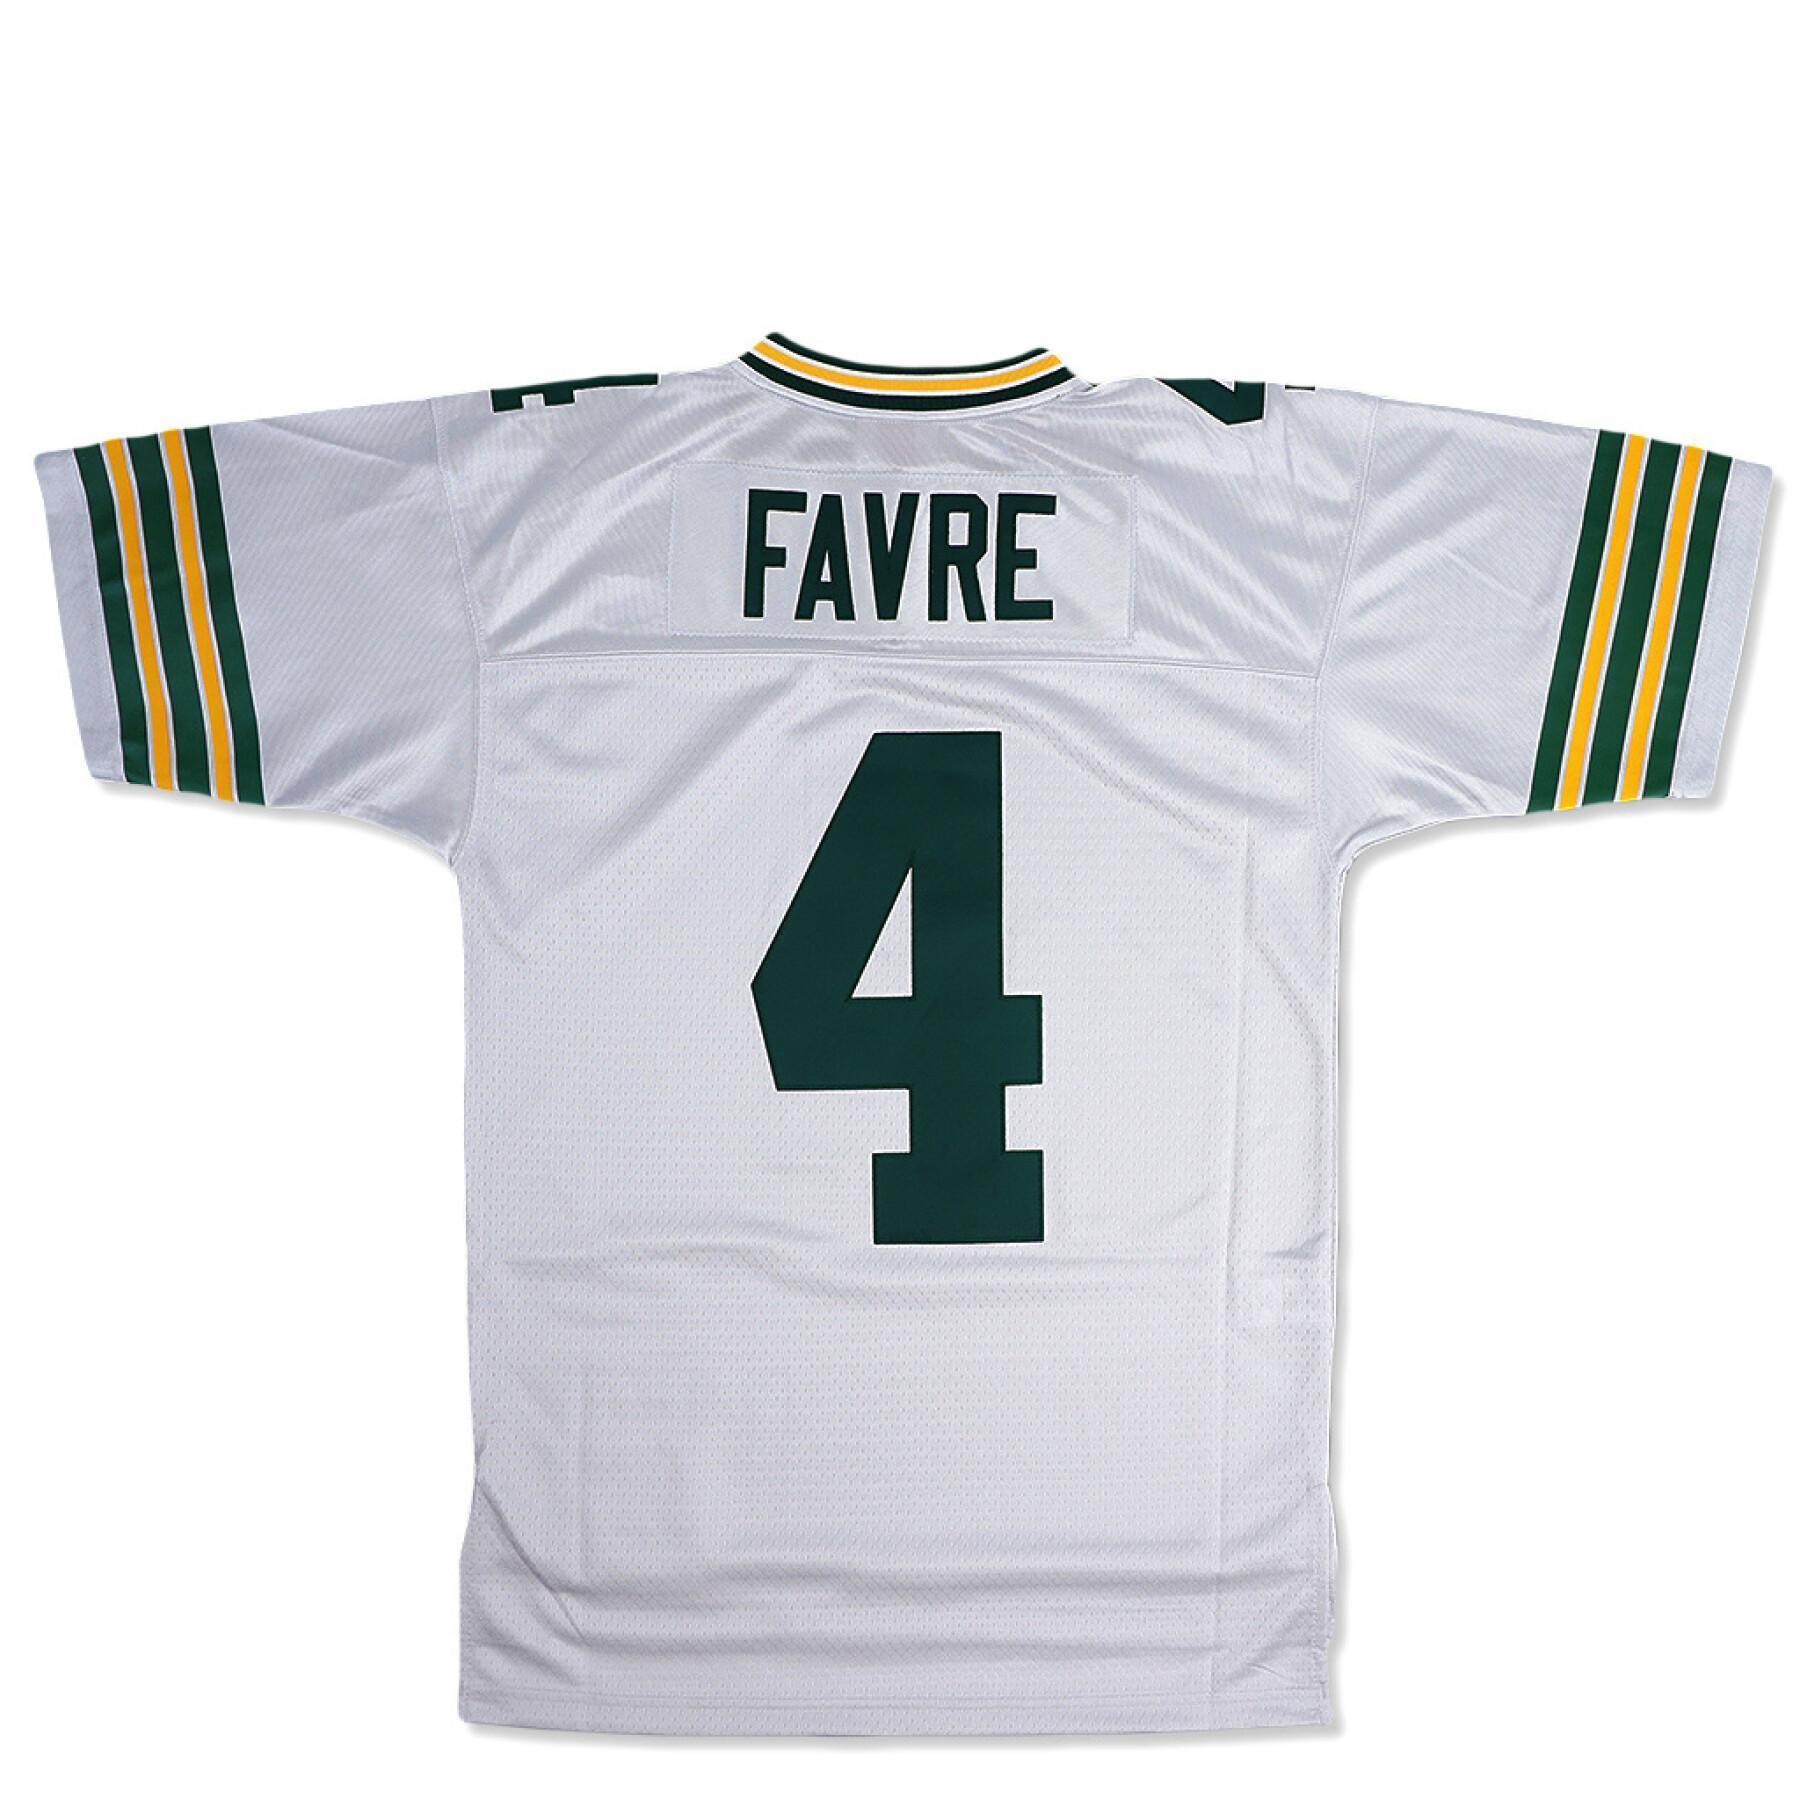 Vintage jersey Green Bay Packers platinum Brett Favre